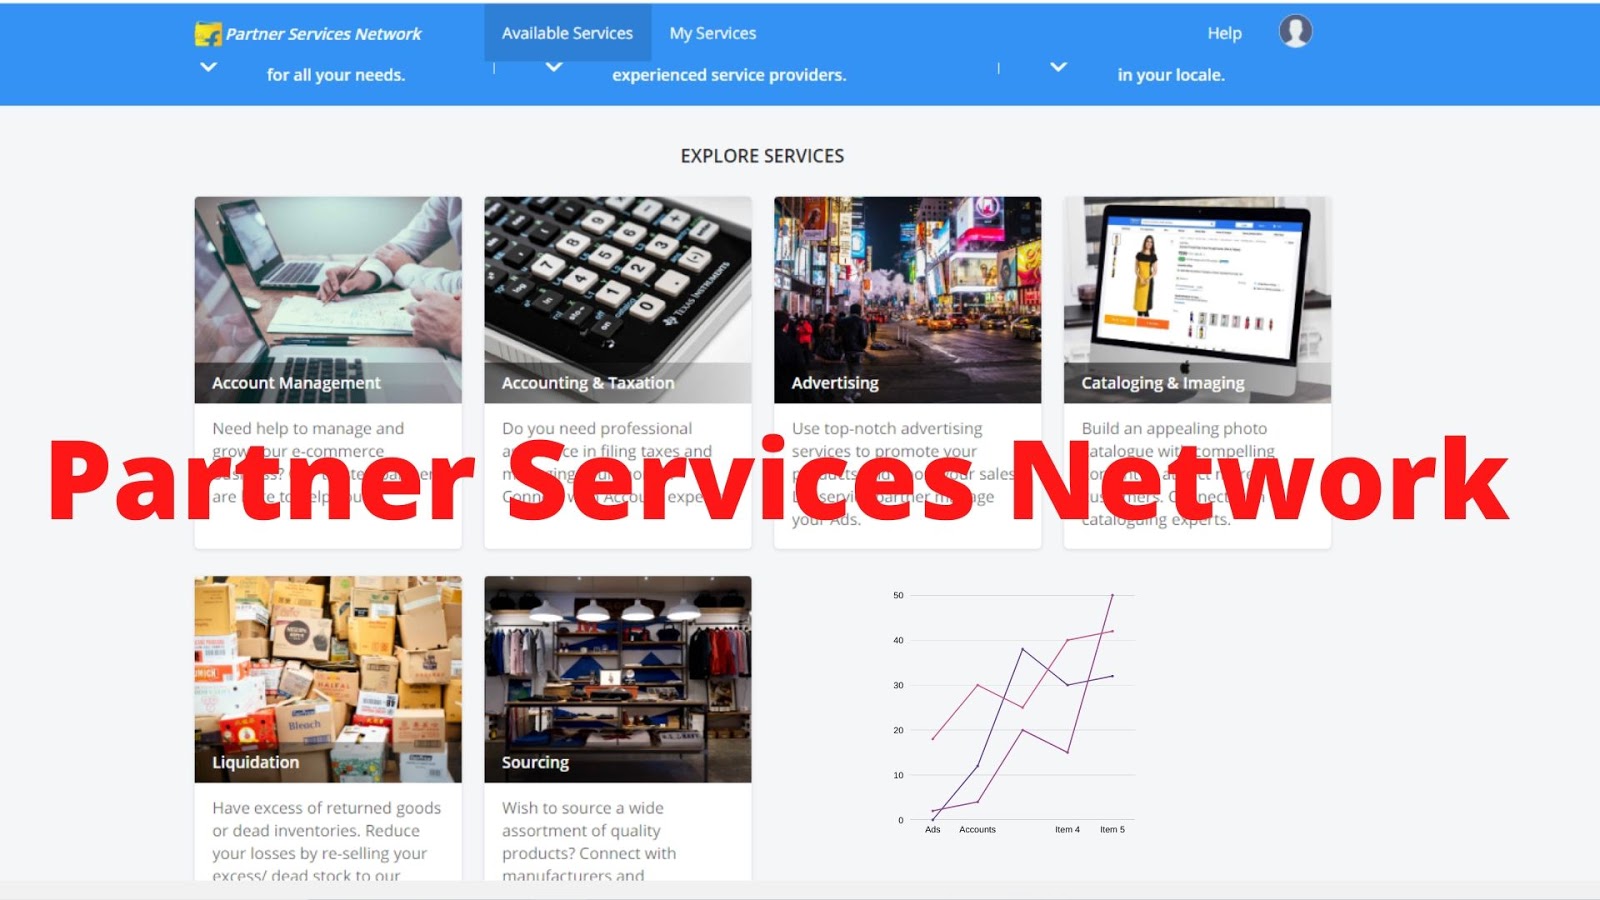 Flipkart Launches Partner Services Network, Partner Services Network in Flipkart, Flipkart, Seller On Flipkart, Flipkart Seller